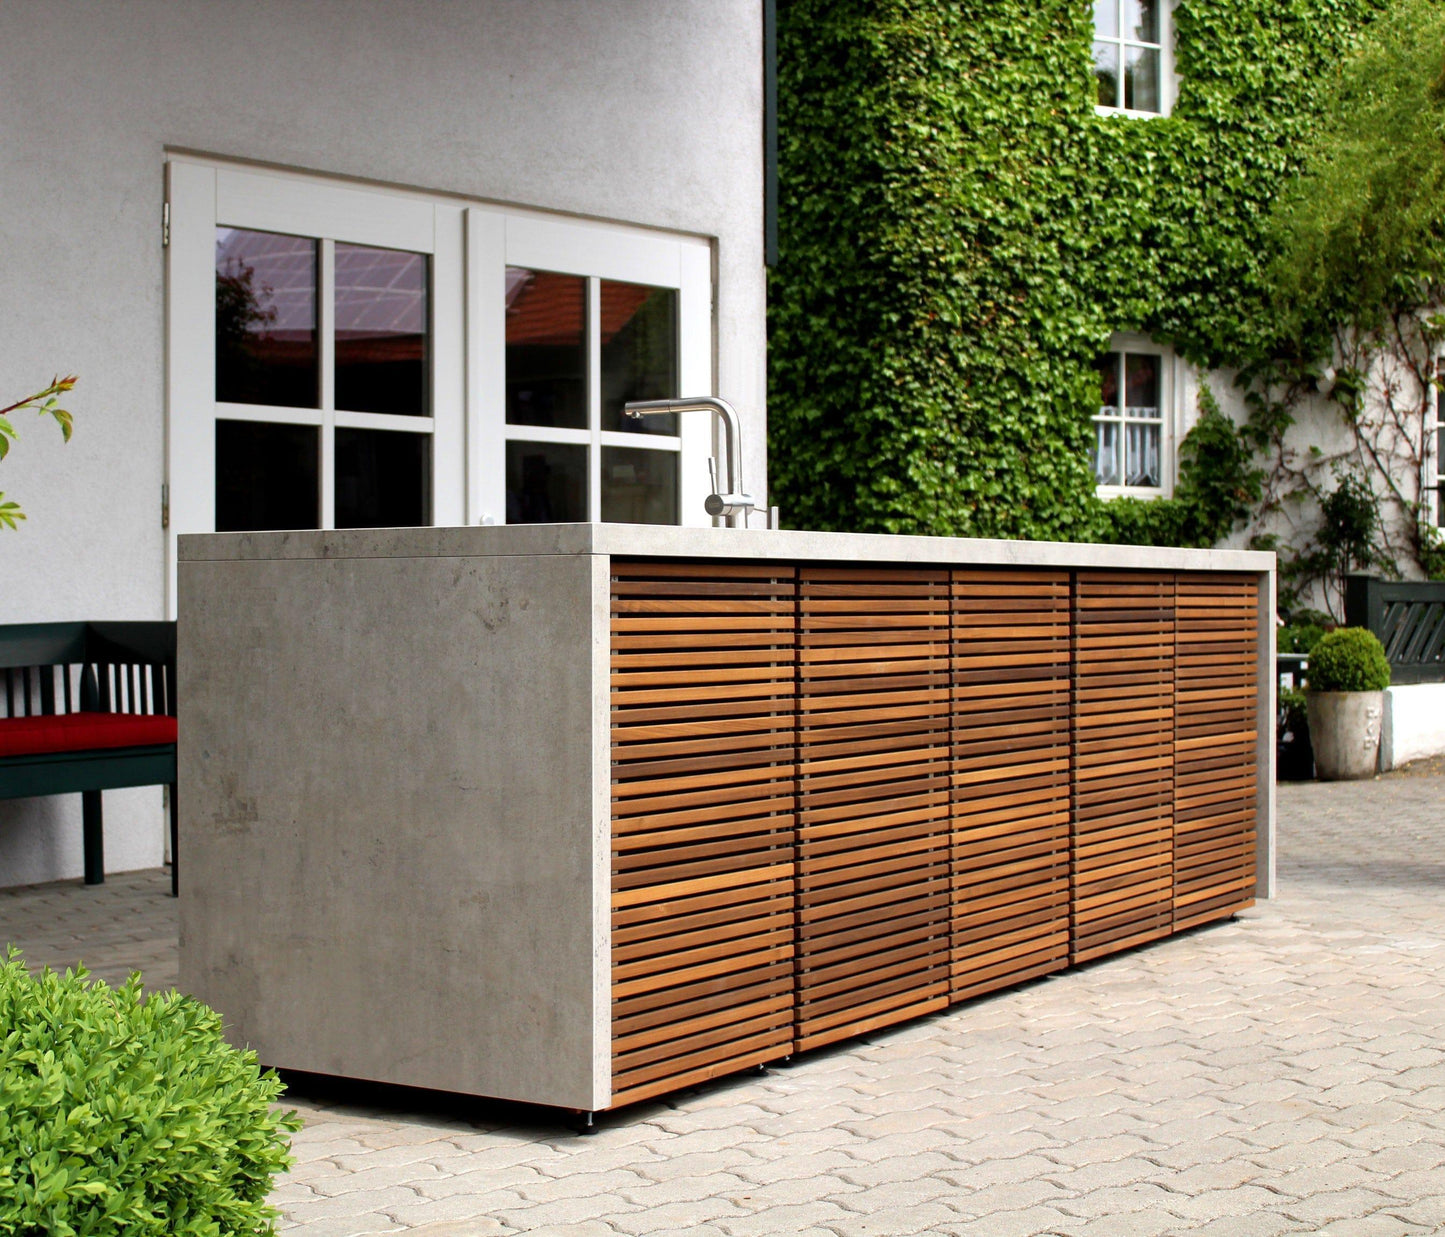 Cubic Outdoor Living Kitchen - C1 Style - Garden House Design